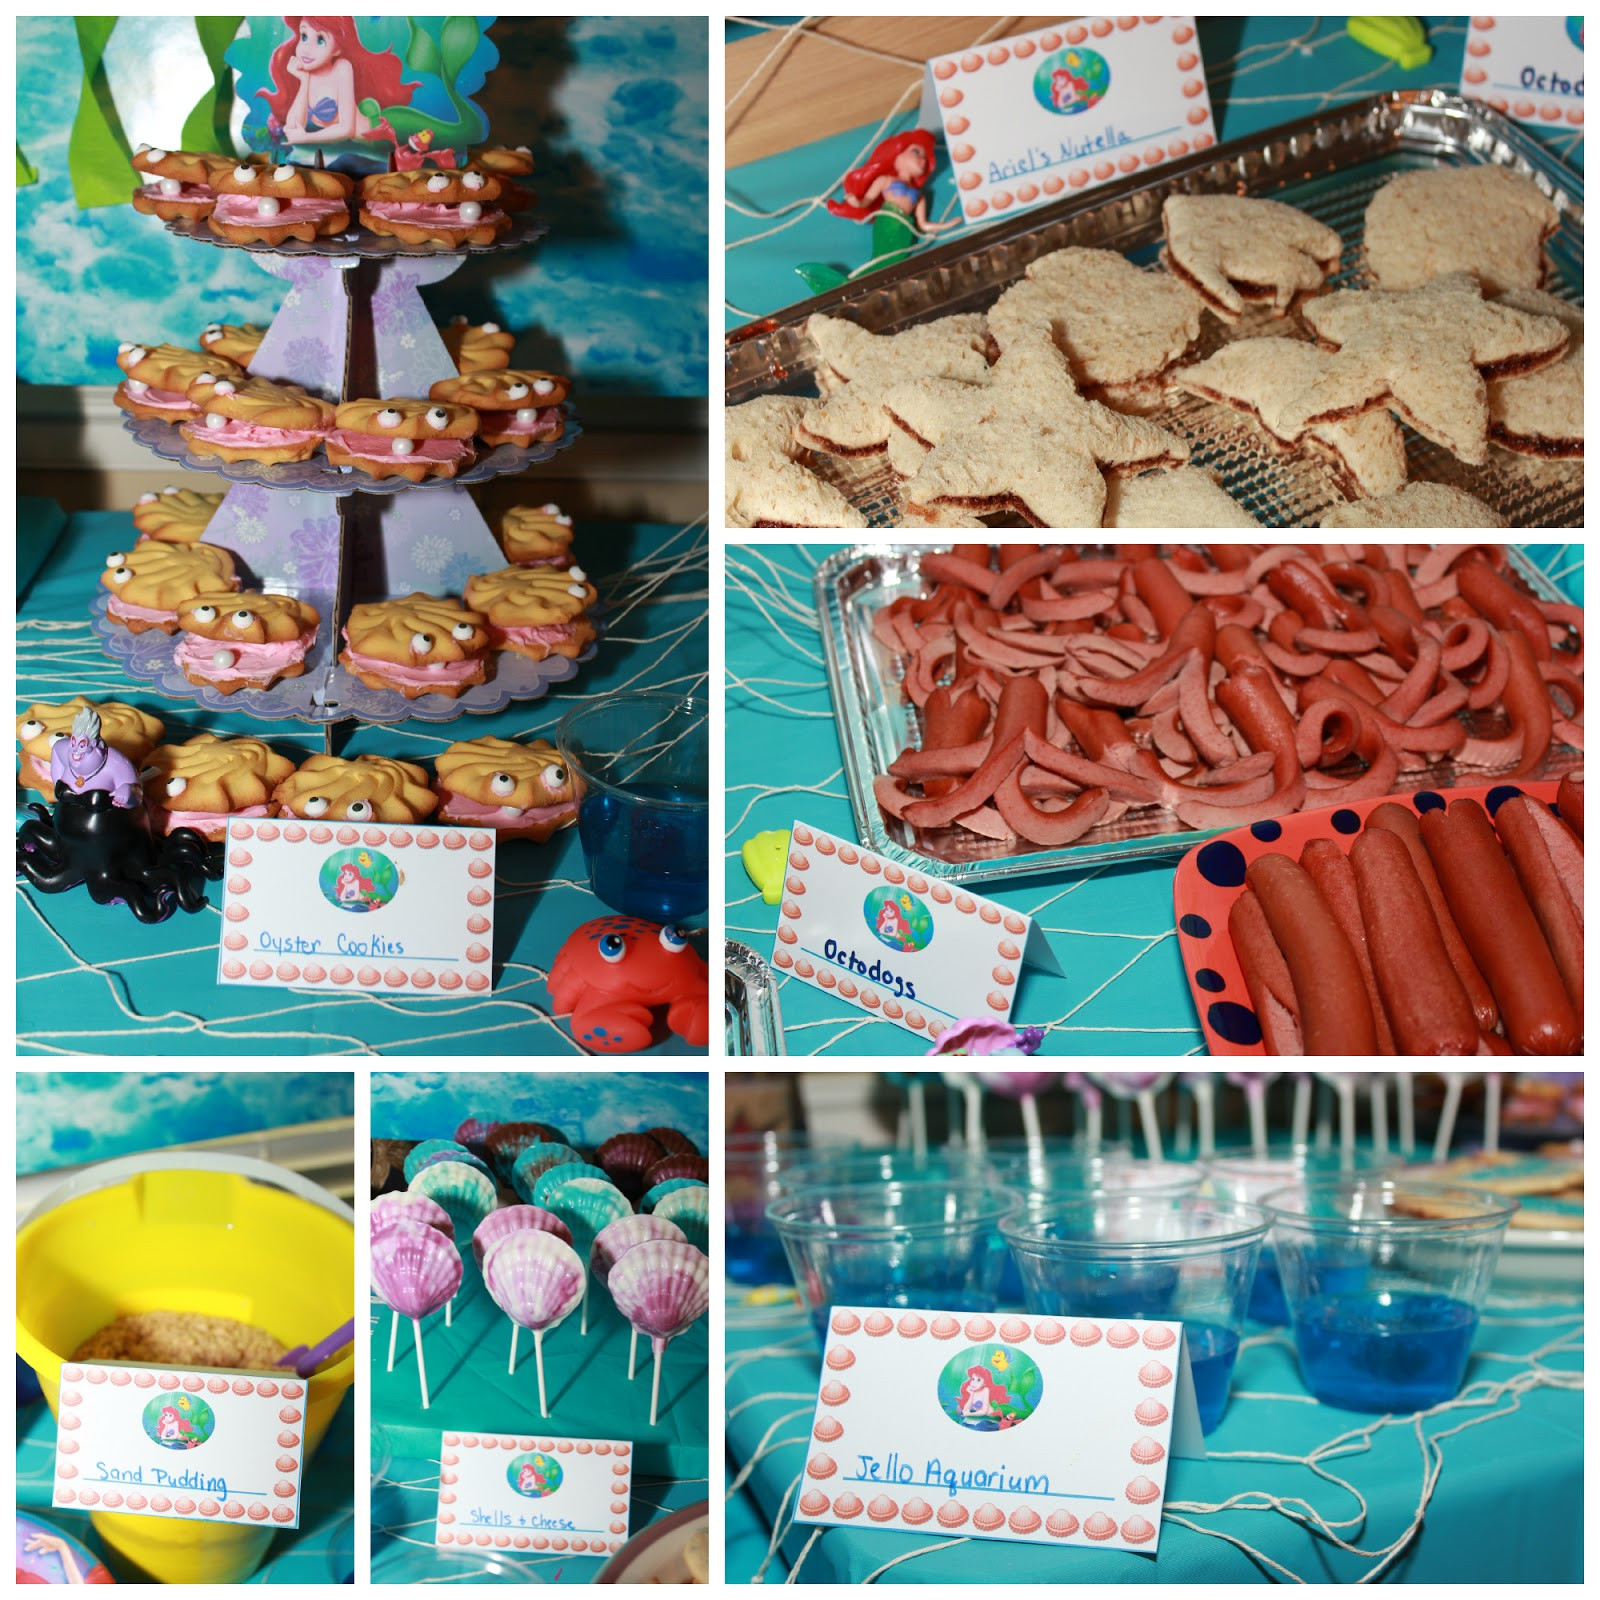 Little Mermaid Party Food Ideas
 Melissa s Party Ideas The Little Mermaid Party Ideas